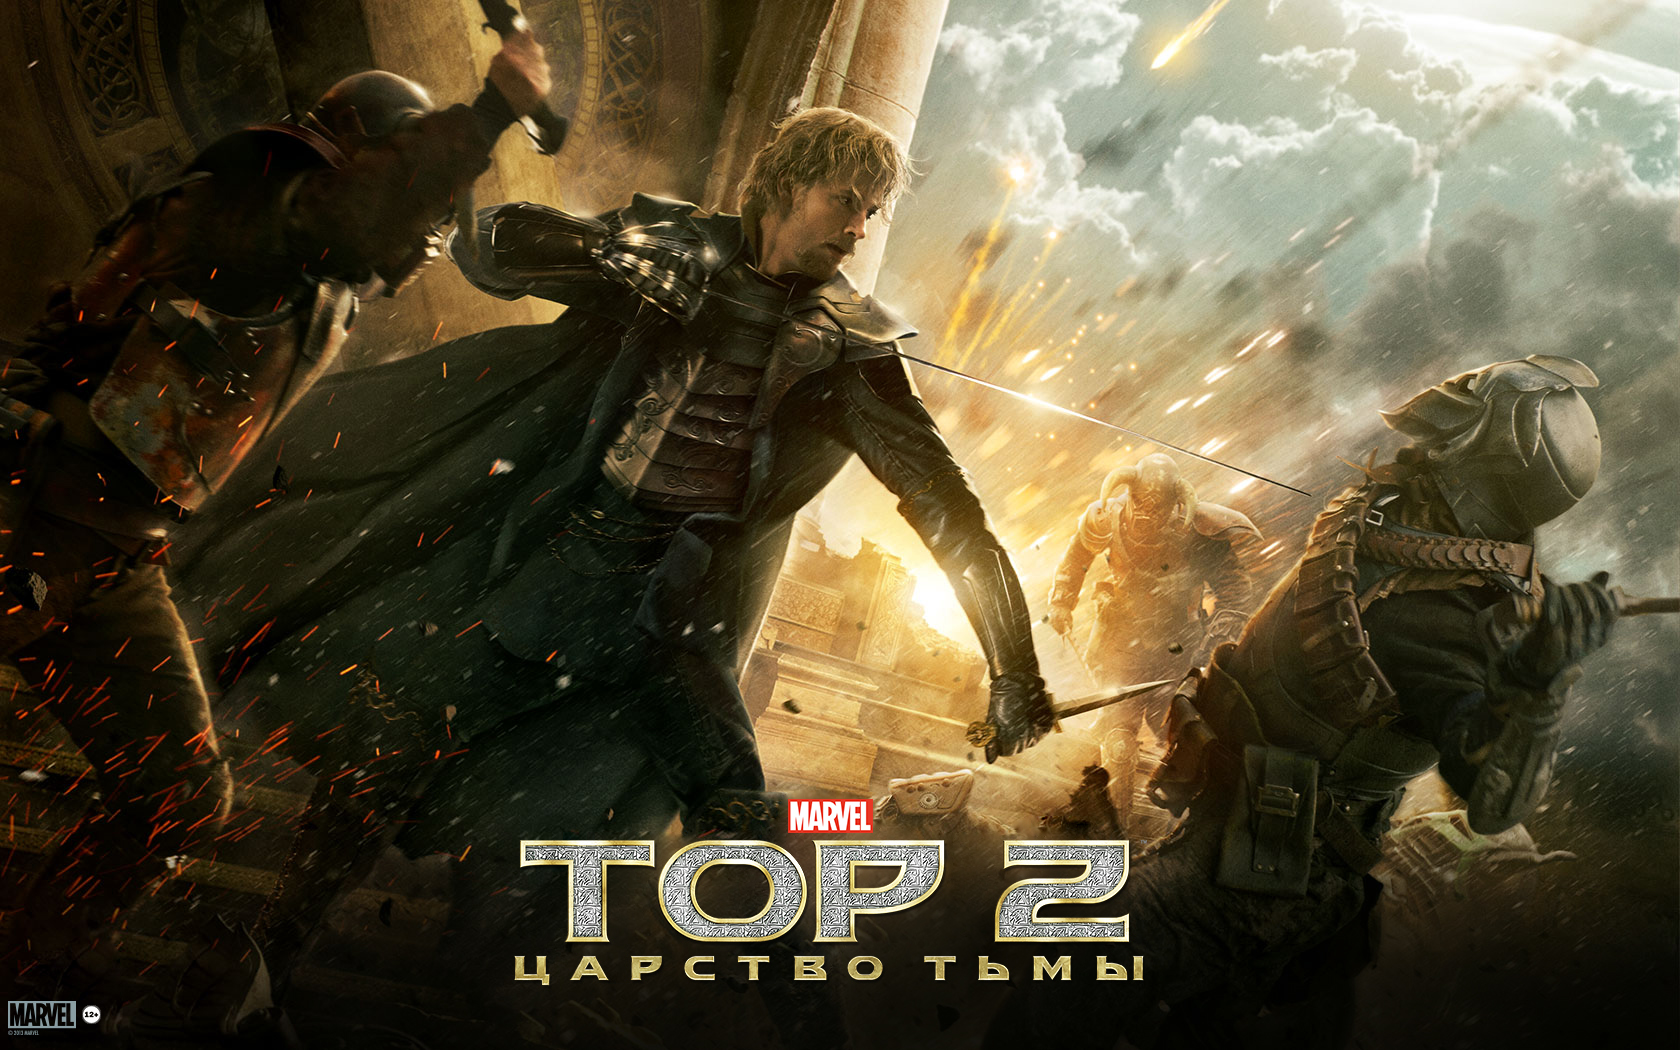 Download HQ Thor 2 The Dark World wallpaper / Movies / 1680x1050